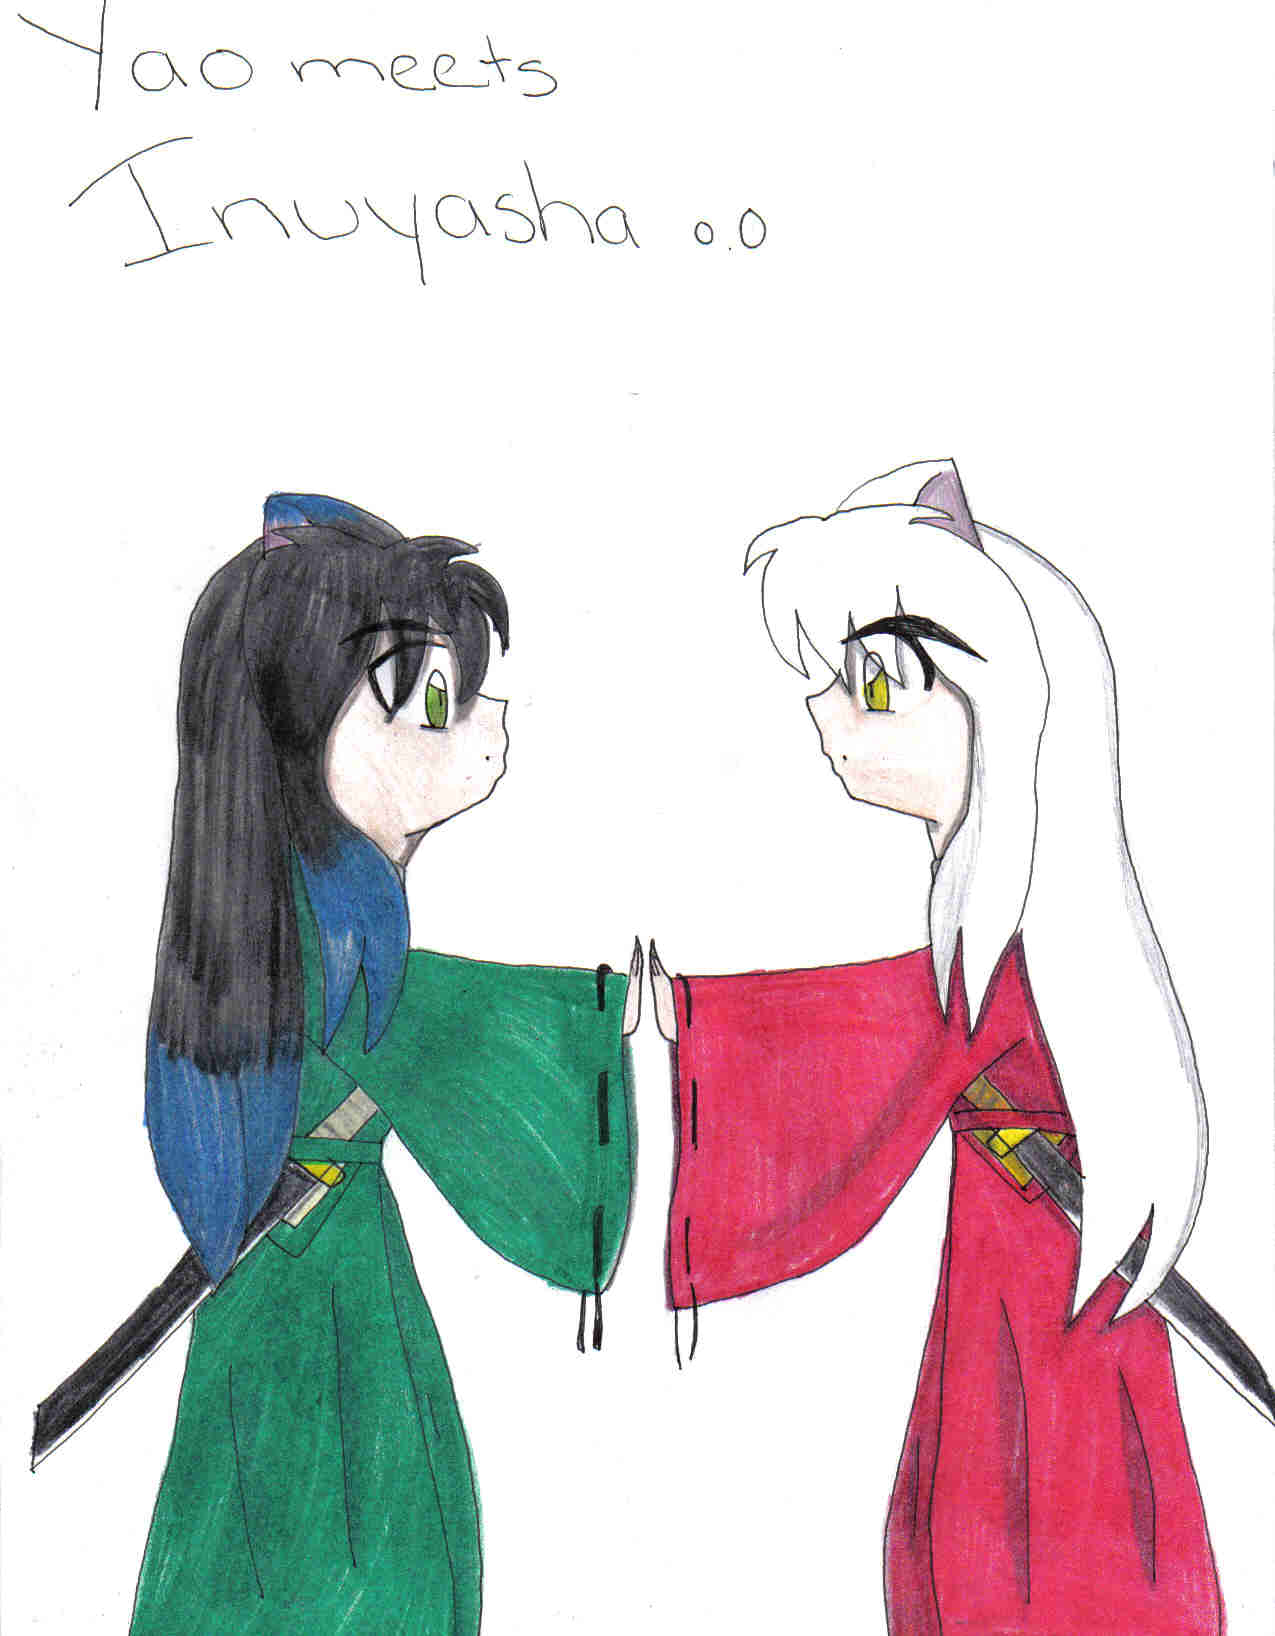 yao meets inuyasha by iamkagome93